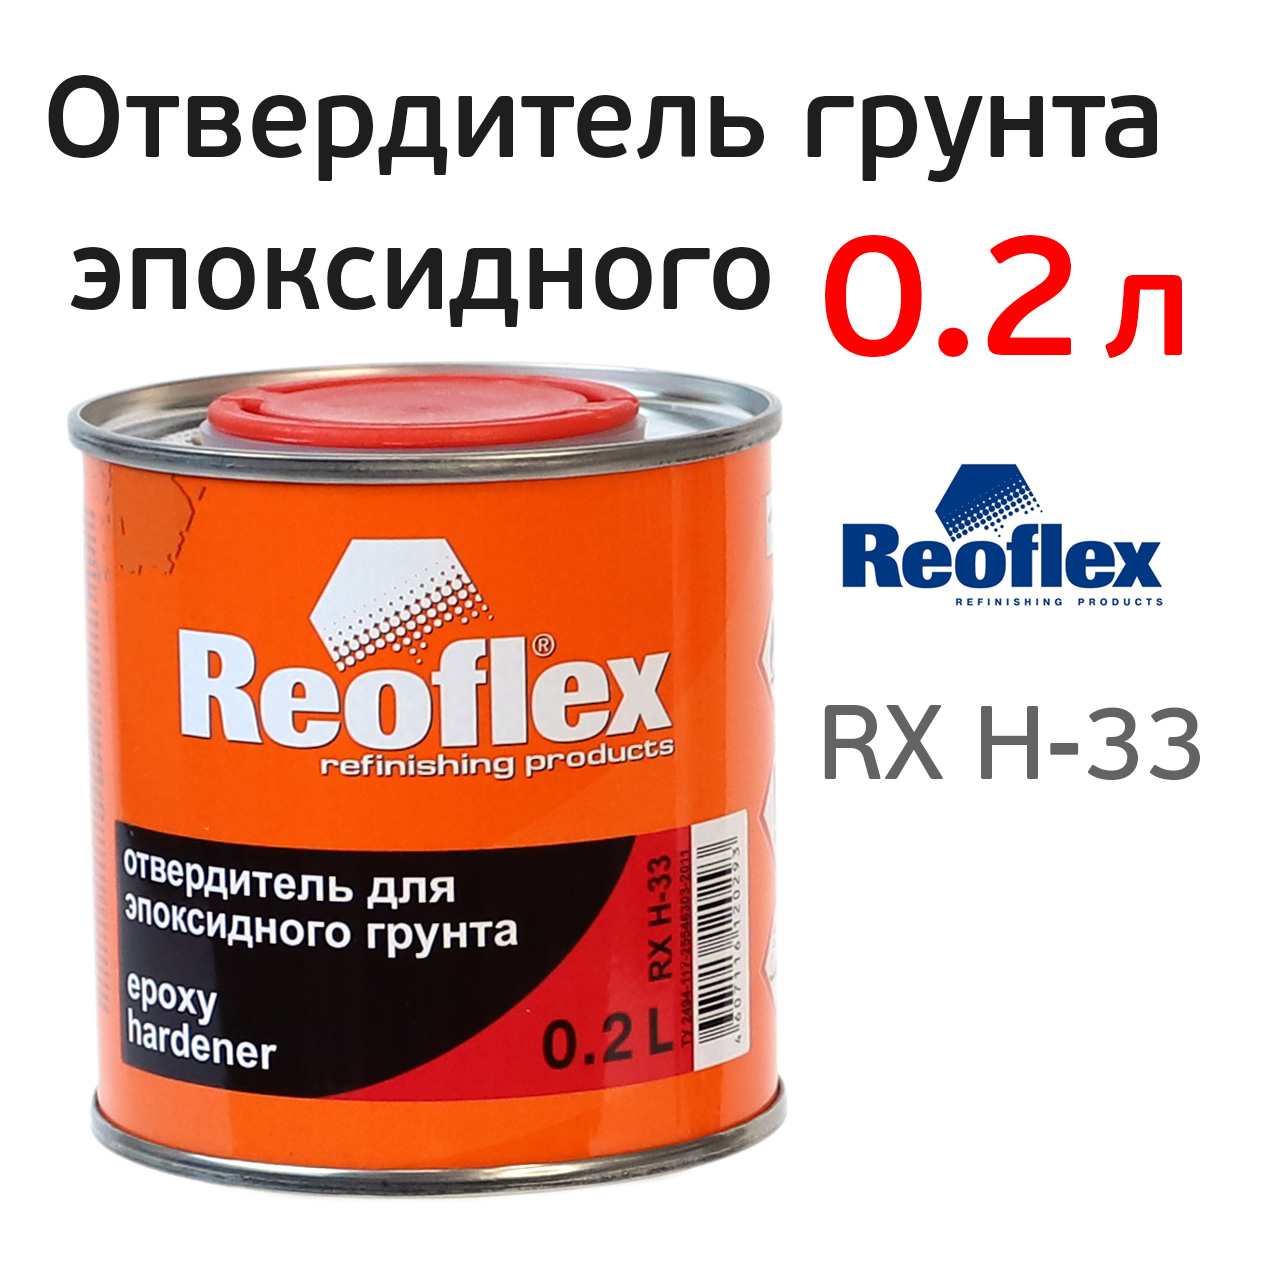   Reoflex  -  6